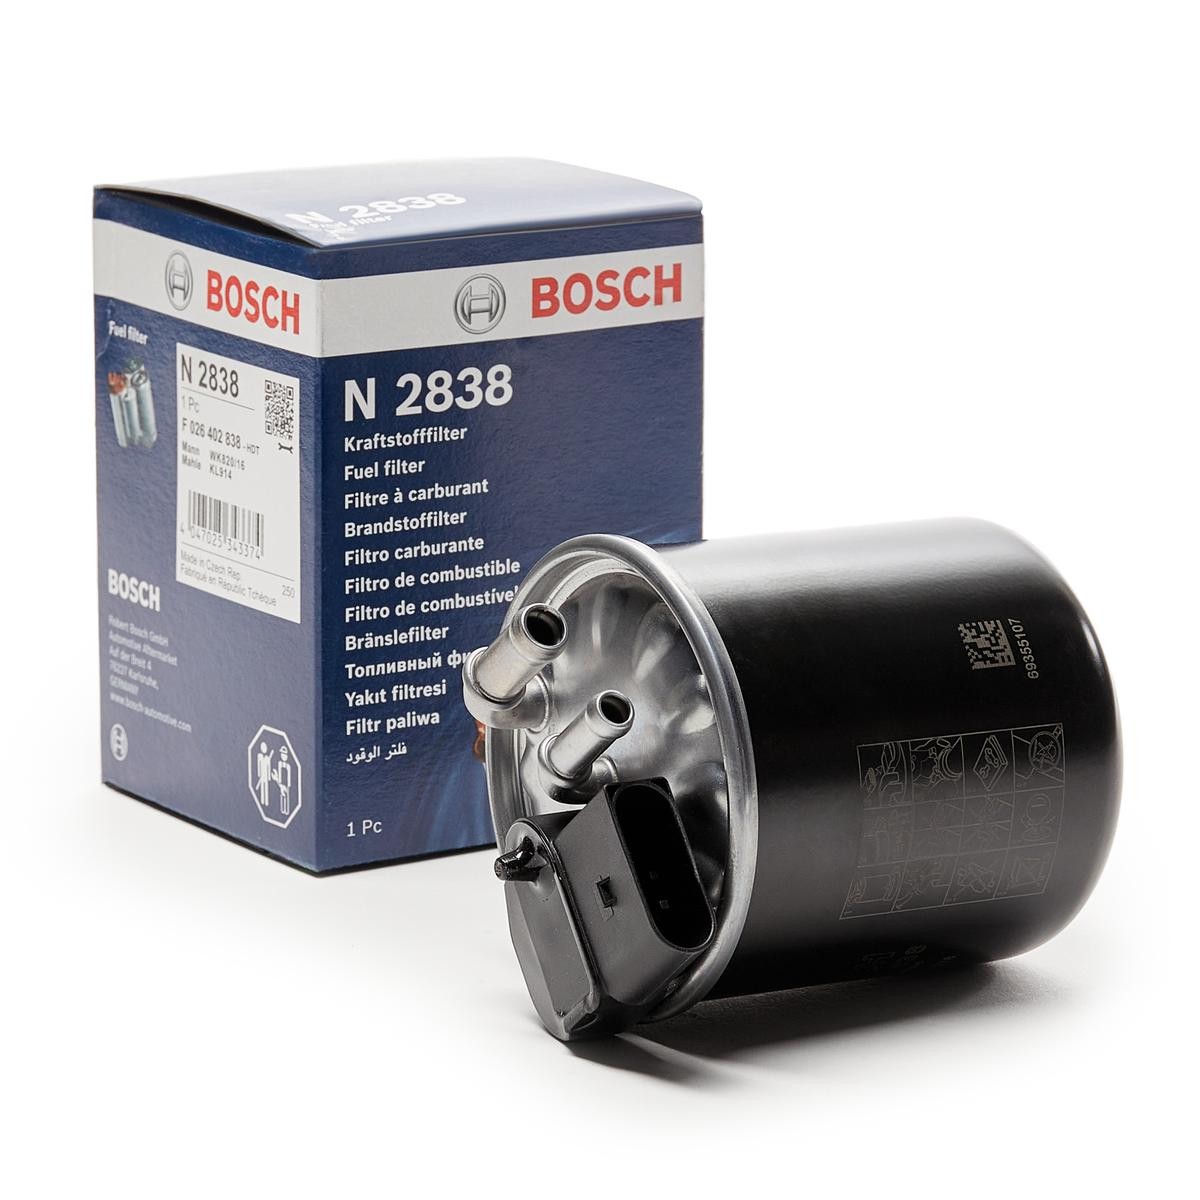 Bosch N2836 - Diesel Filter Car